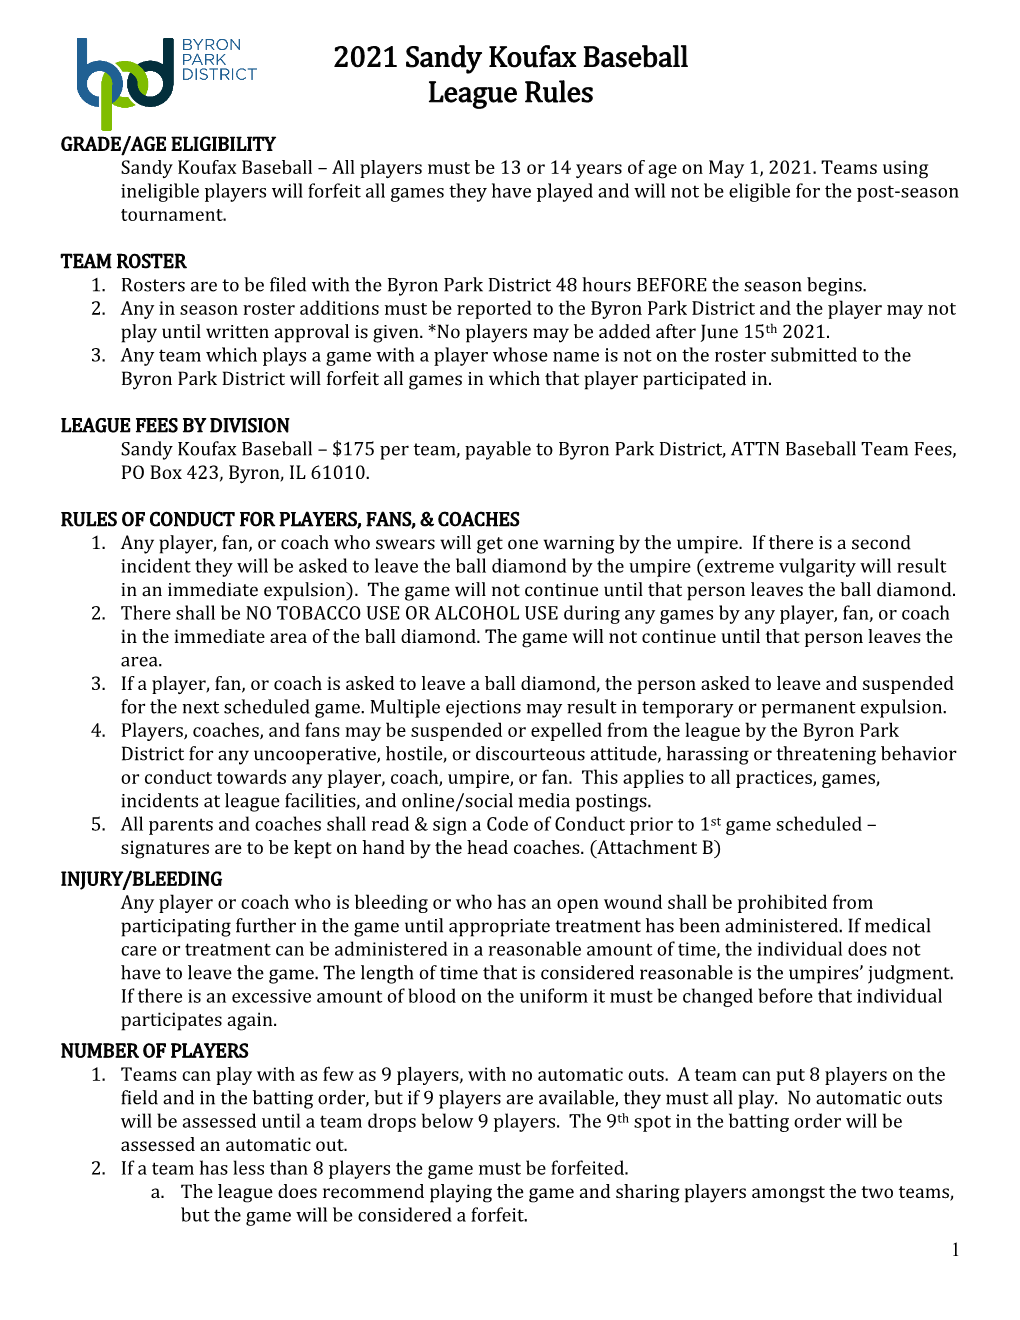 2021 Sandy Koufax Baseball League Rules